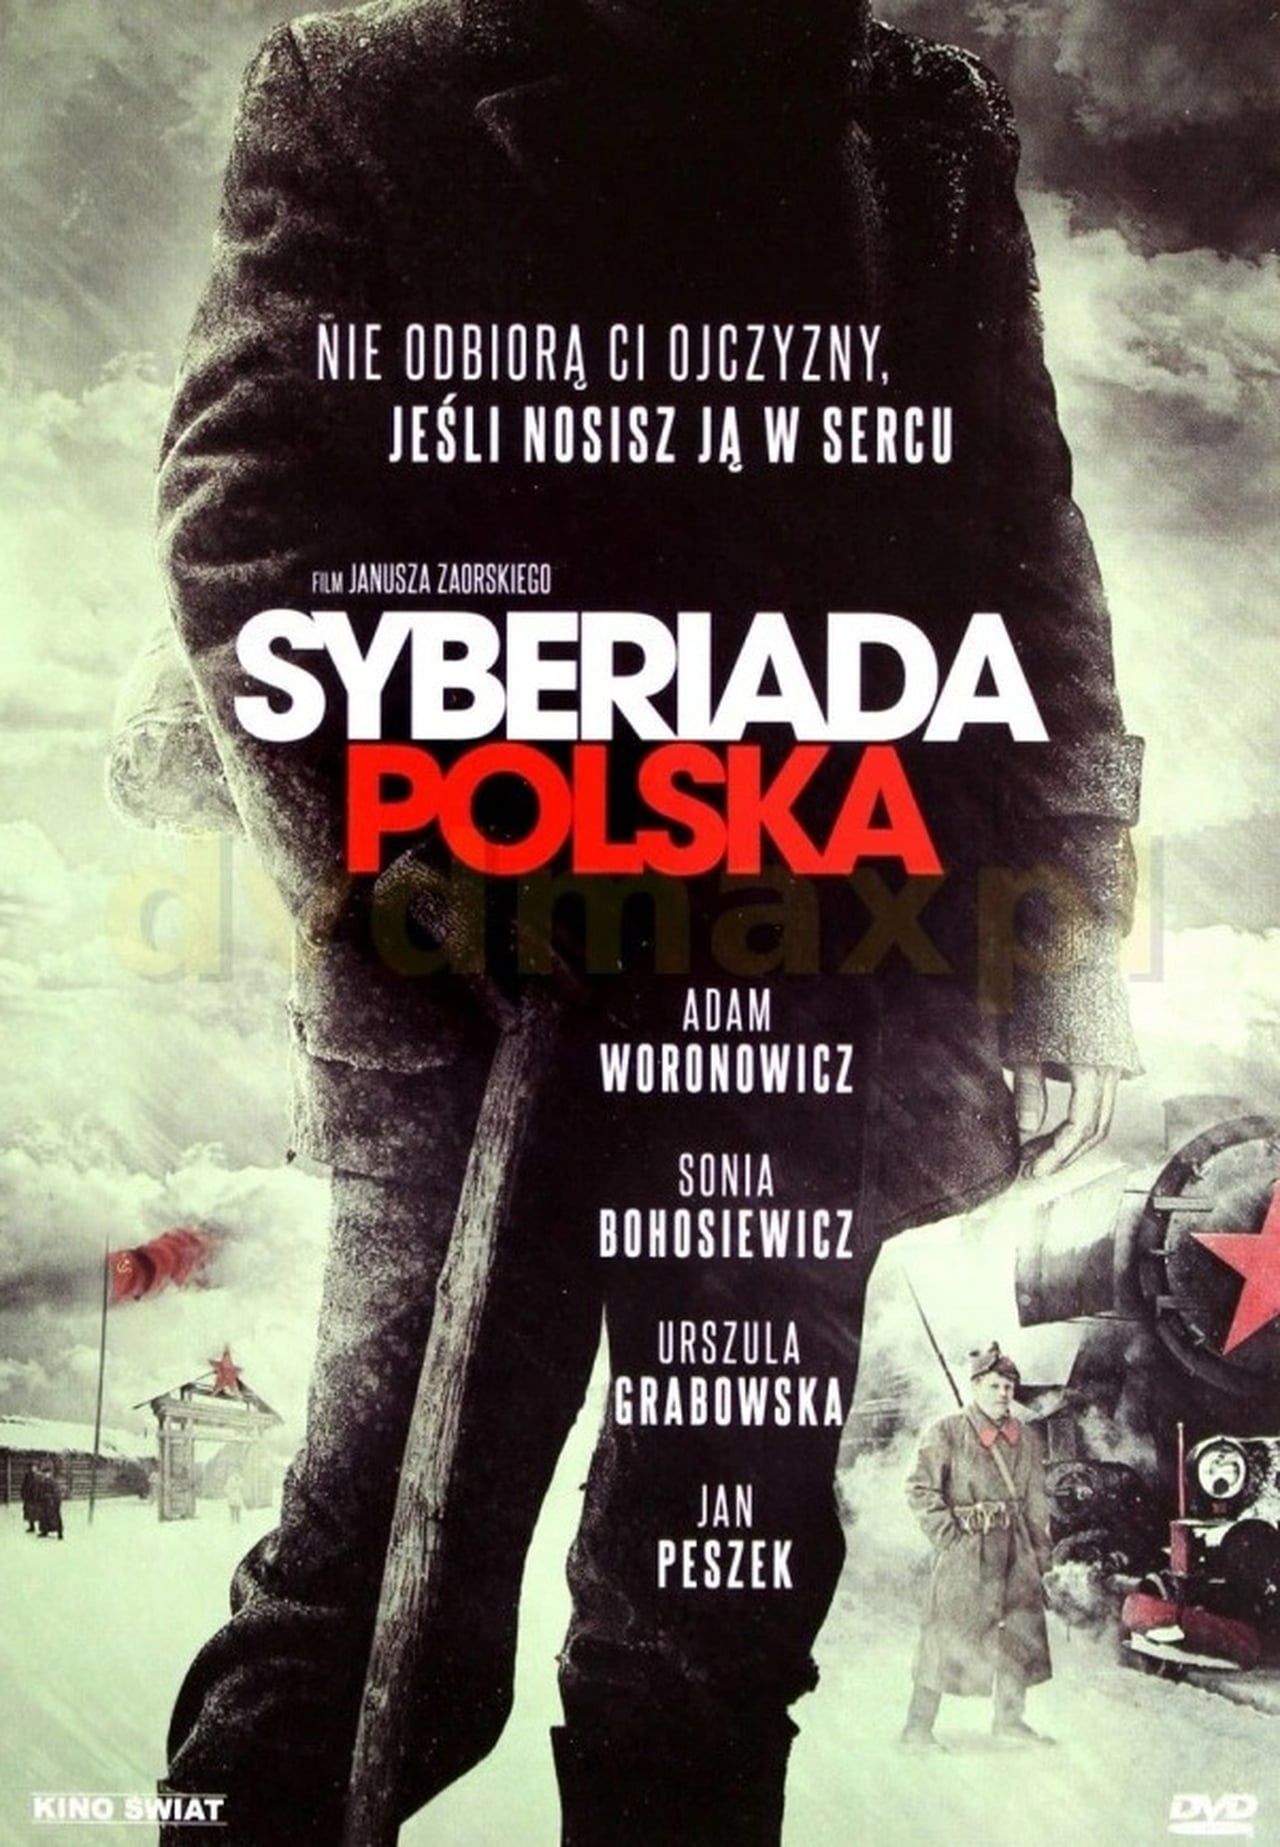 Польська сибіріада (2013)